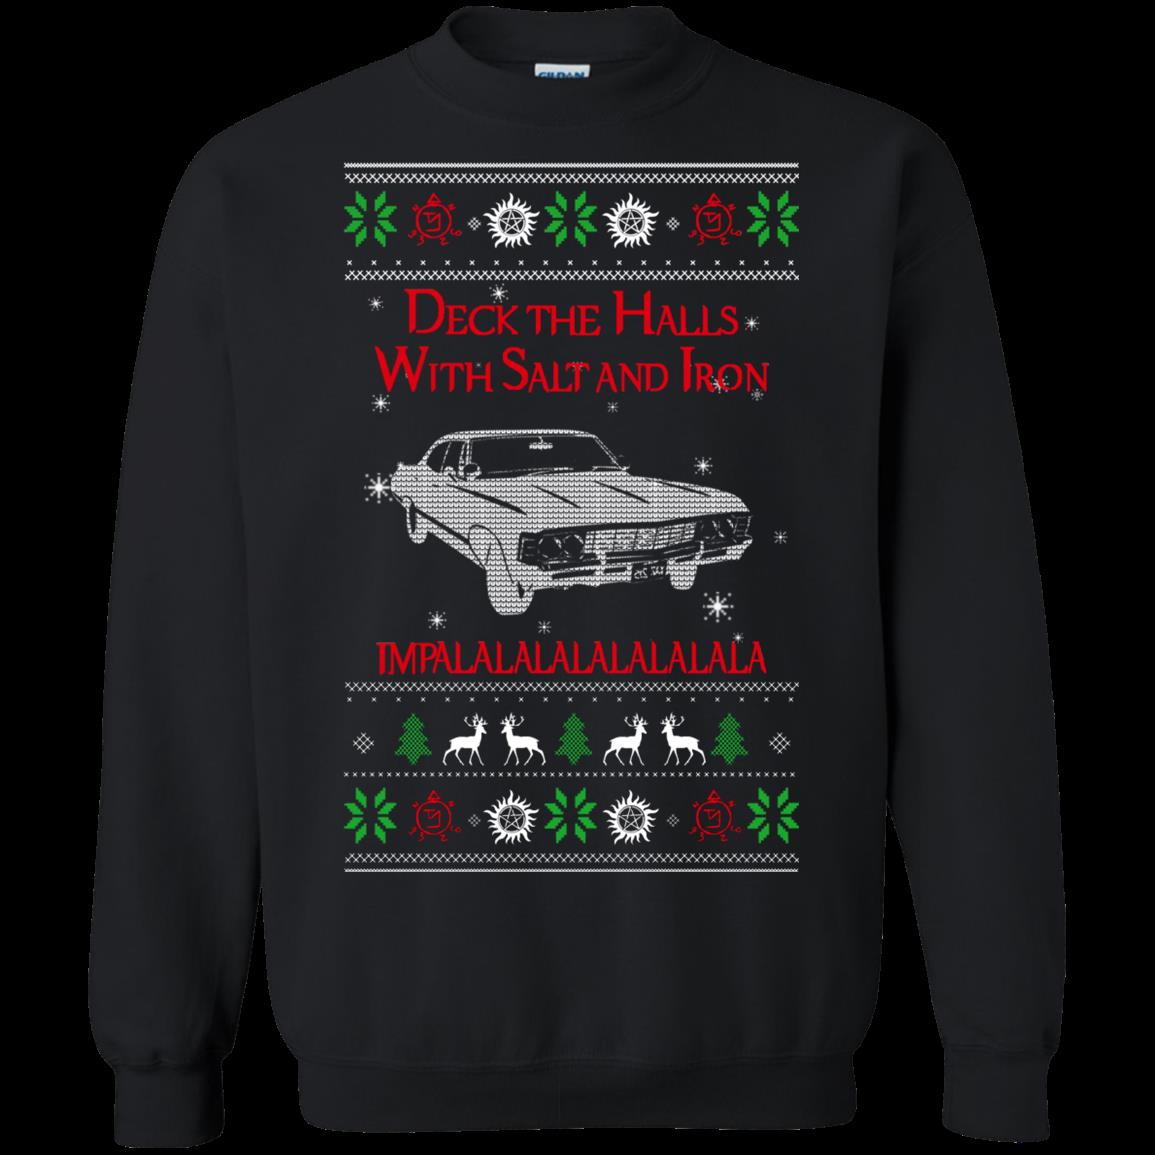 S Deck The Halls With Salt And Iron Impala Lalalalalalala Supernatural Ugly Christmas Shirts T Shirt Hoodies Sweatshirt